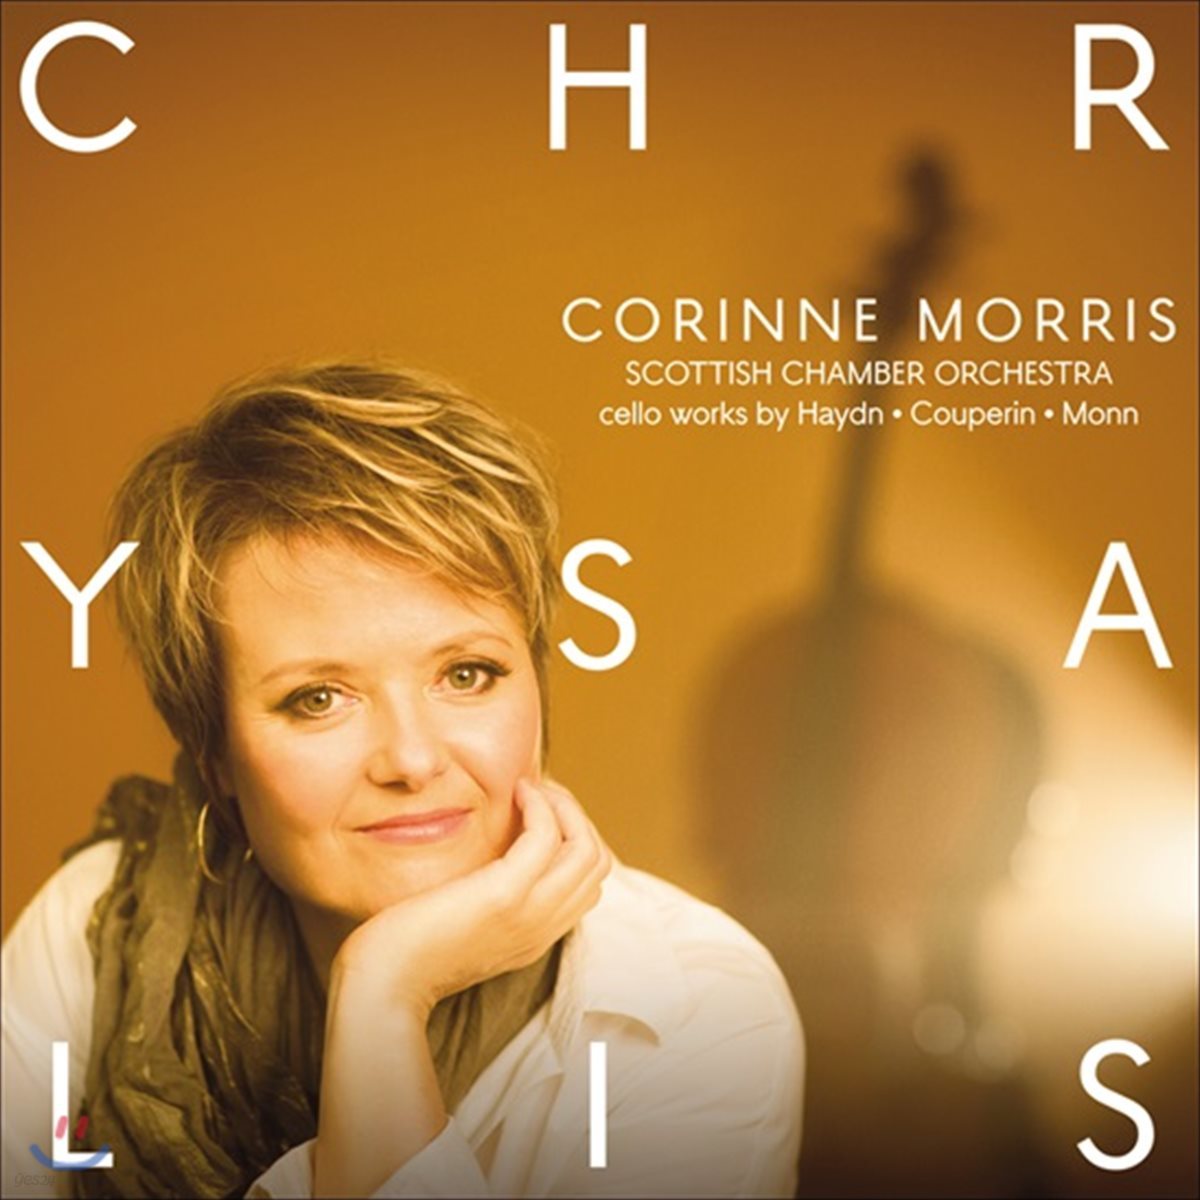 Corinne Morris 전환기 - 하이든 / 쿠프랭 / 몬: 첼로 협주곡 - 코린 모리스, 스코티쉬 챔버 오케스트라 (Chrysalis - Haydn / Couperin / Monn: Cello Works)